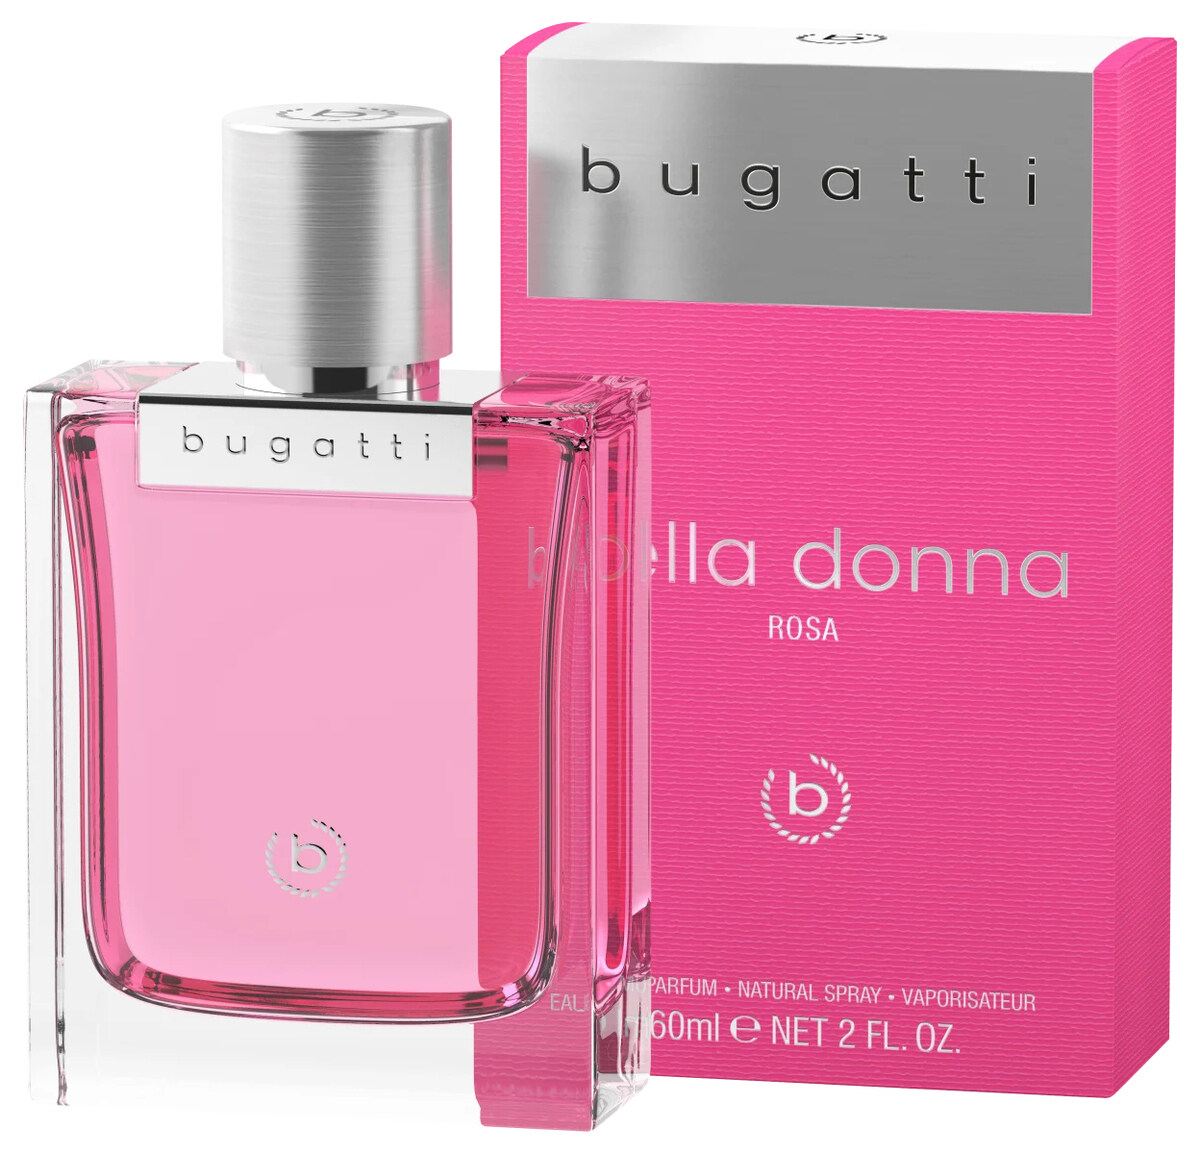 Bella Donna Rosa by bugatti Fashion » Reviews & Perfume Facts